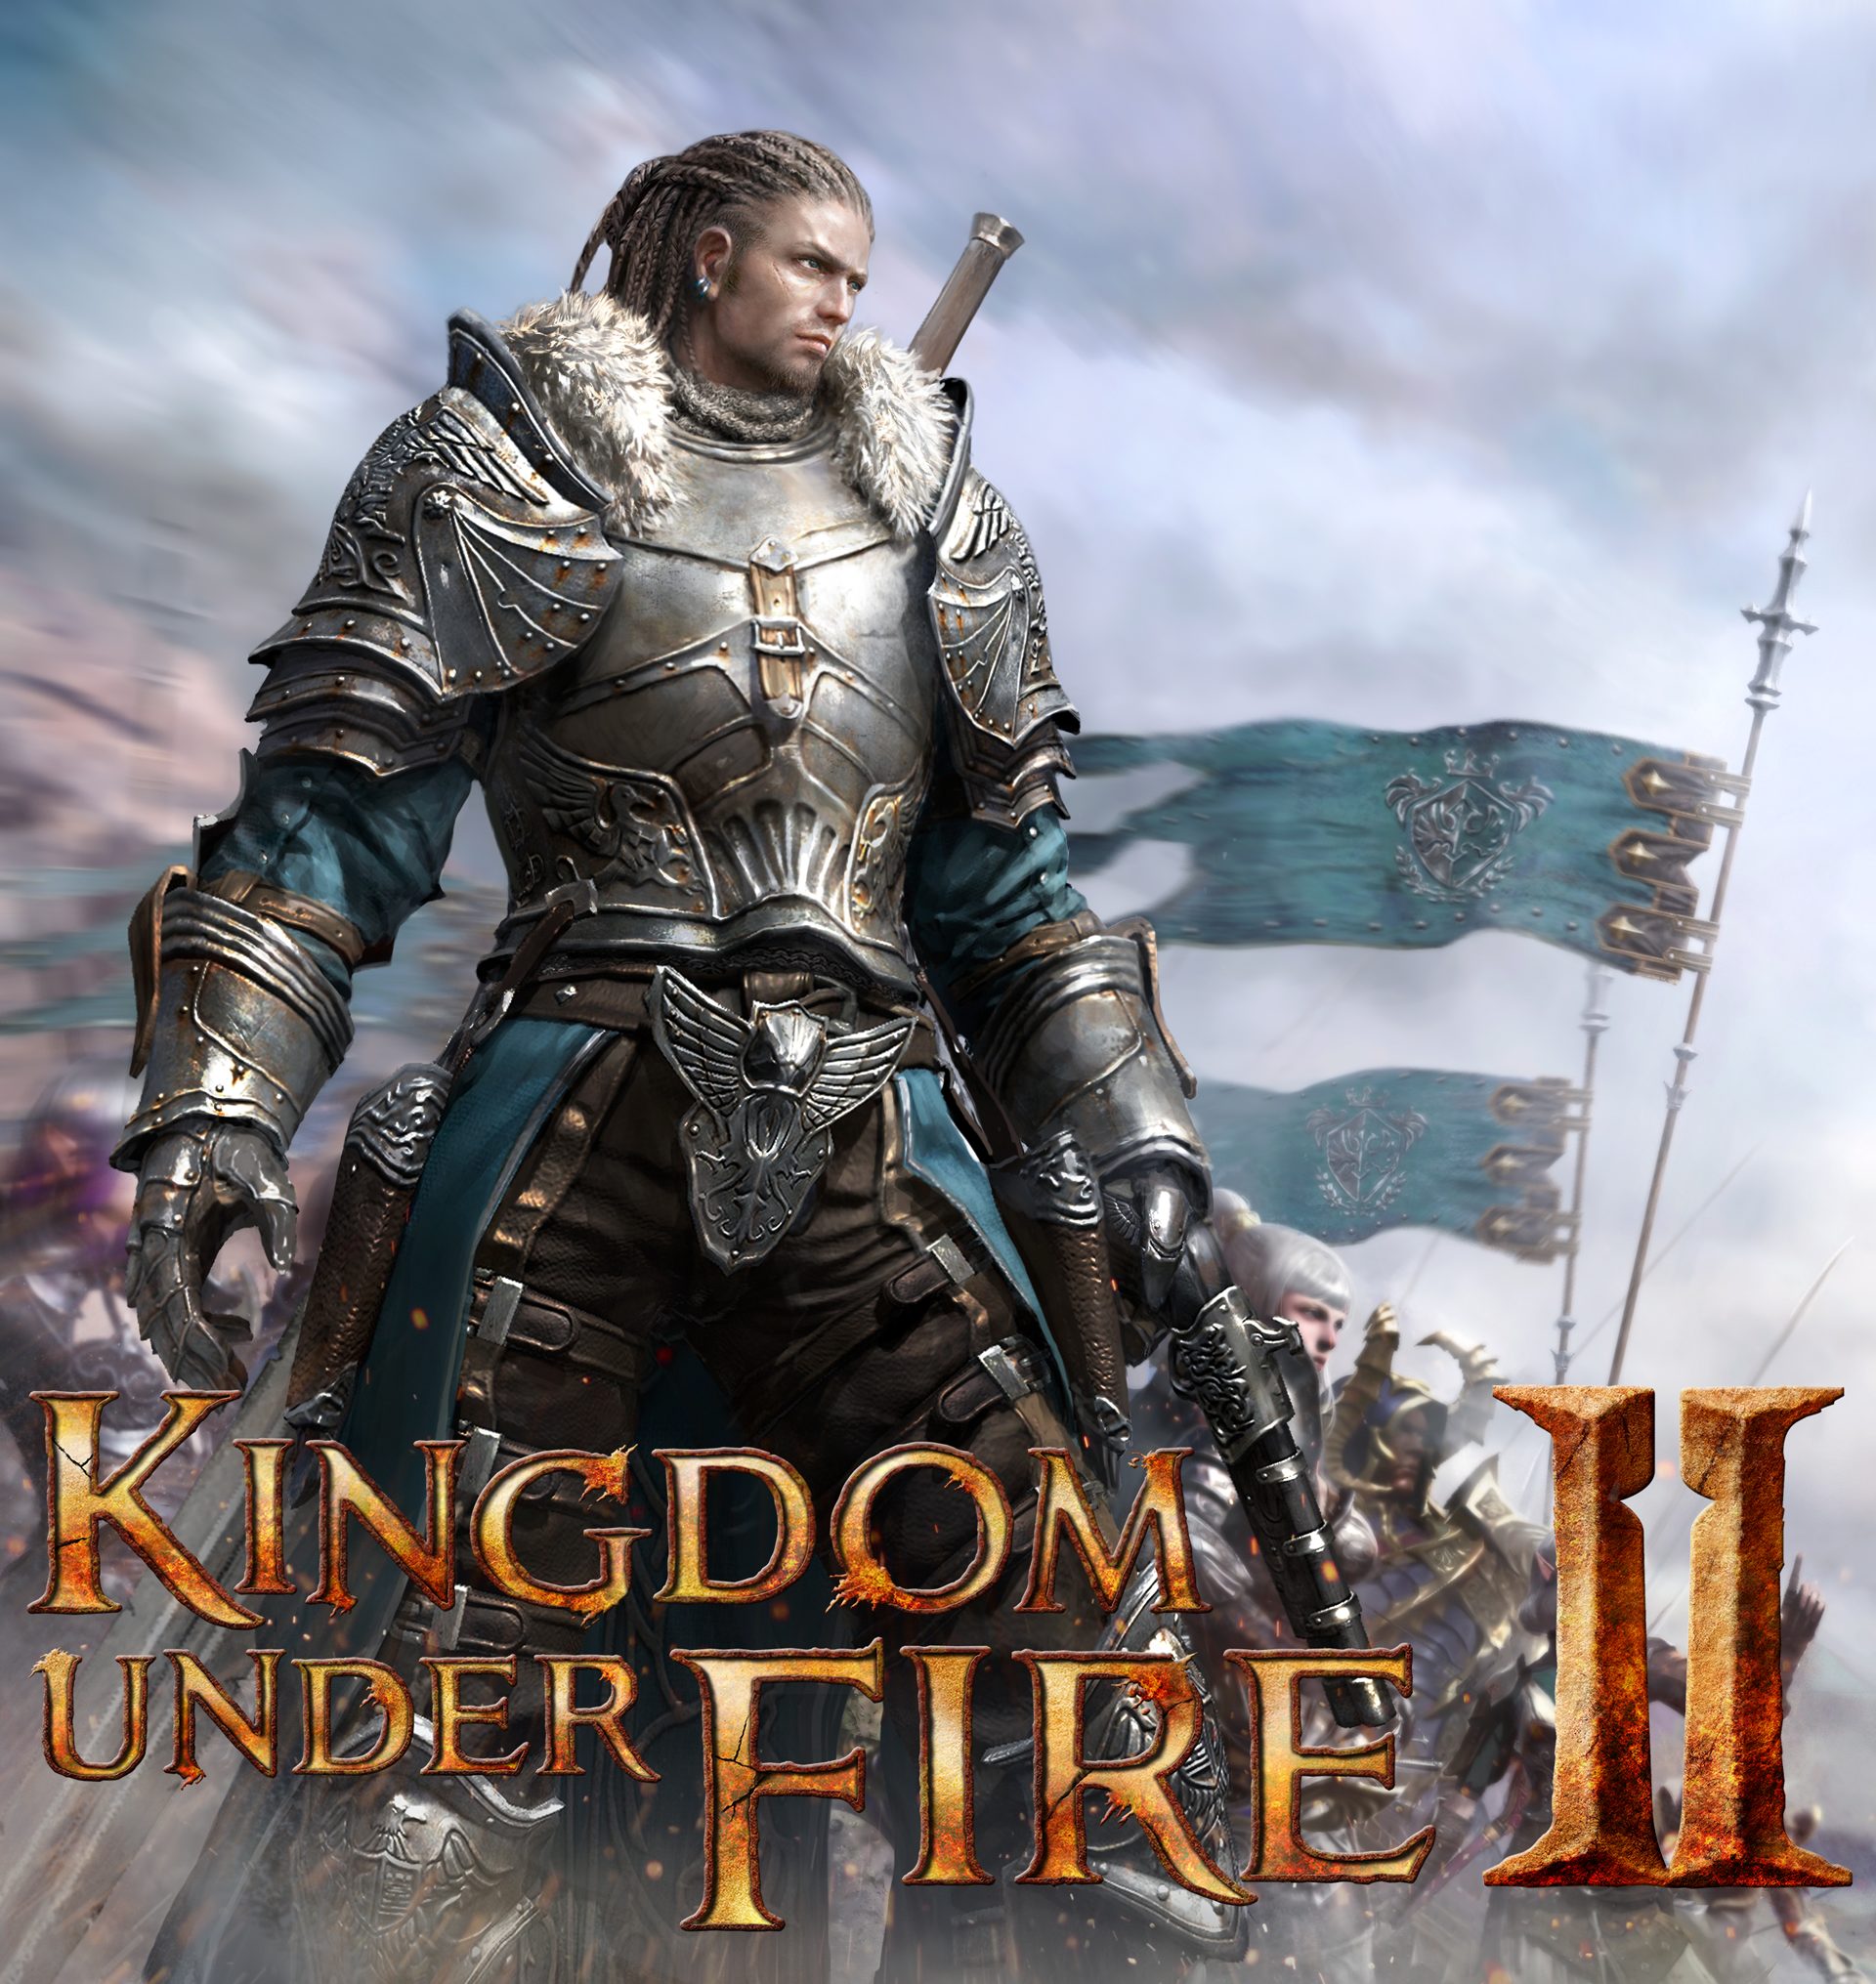 kingdom under fire 2 download usa